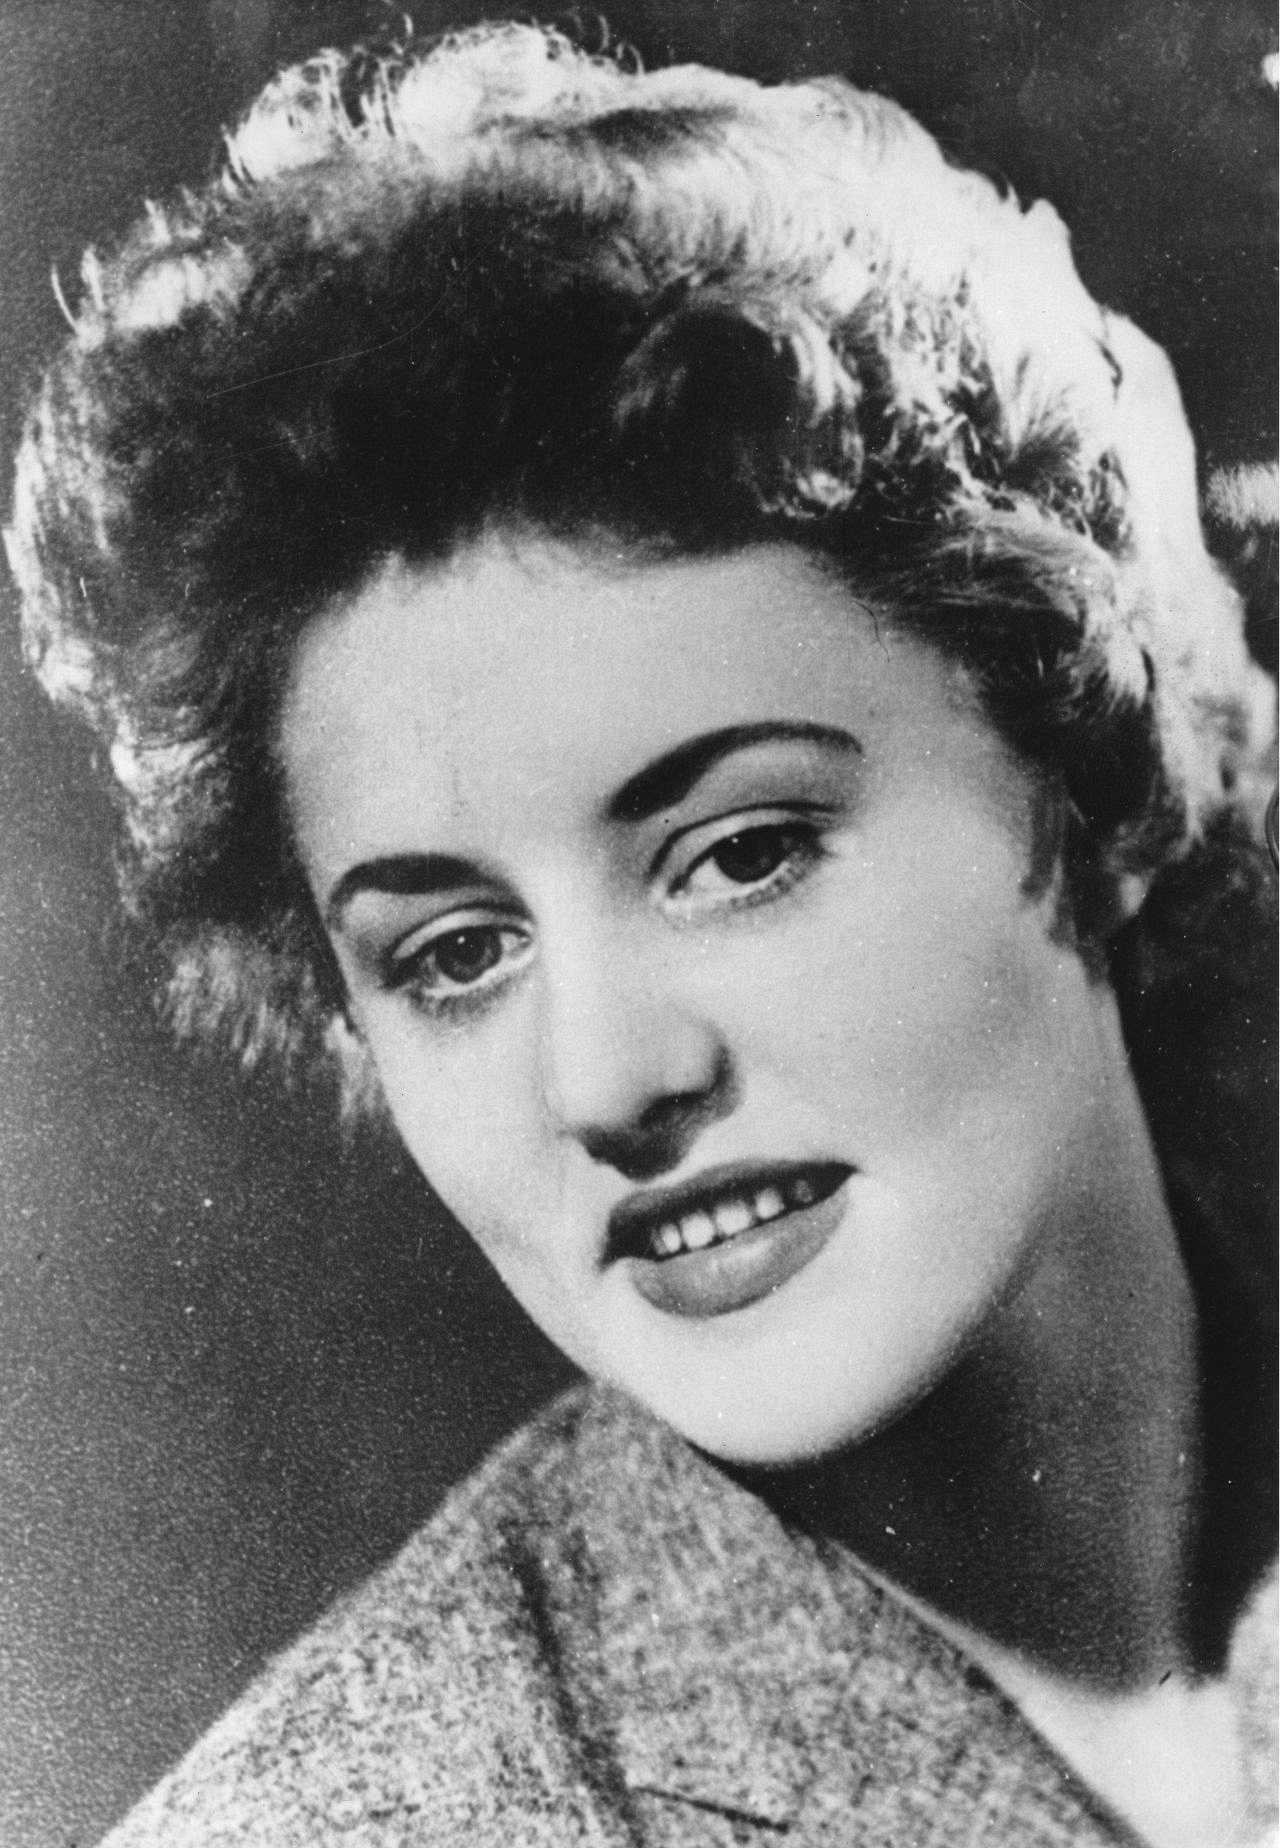 Porträtfoto der Frankfurter Prostituierten Rosemarie Nitribitt, ca. 1955.